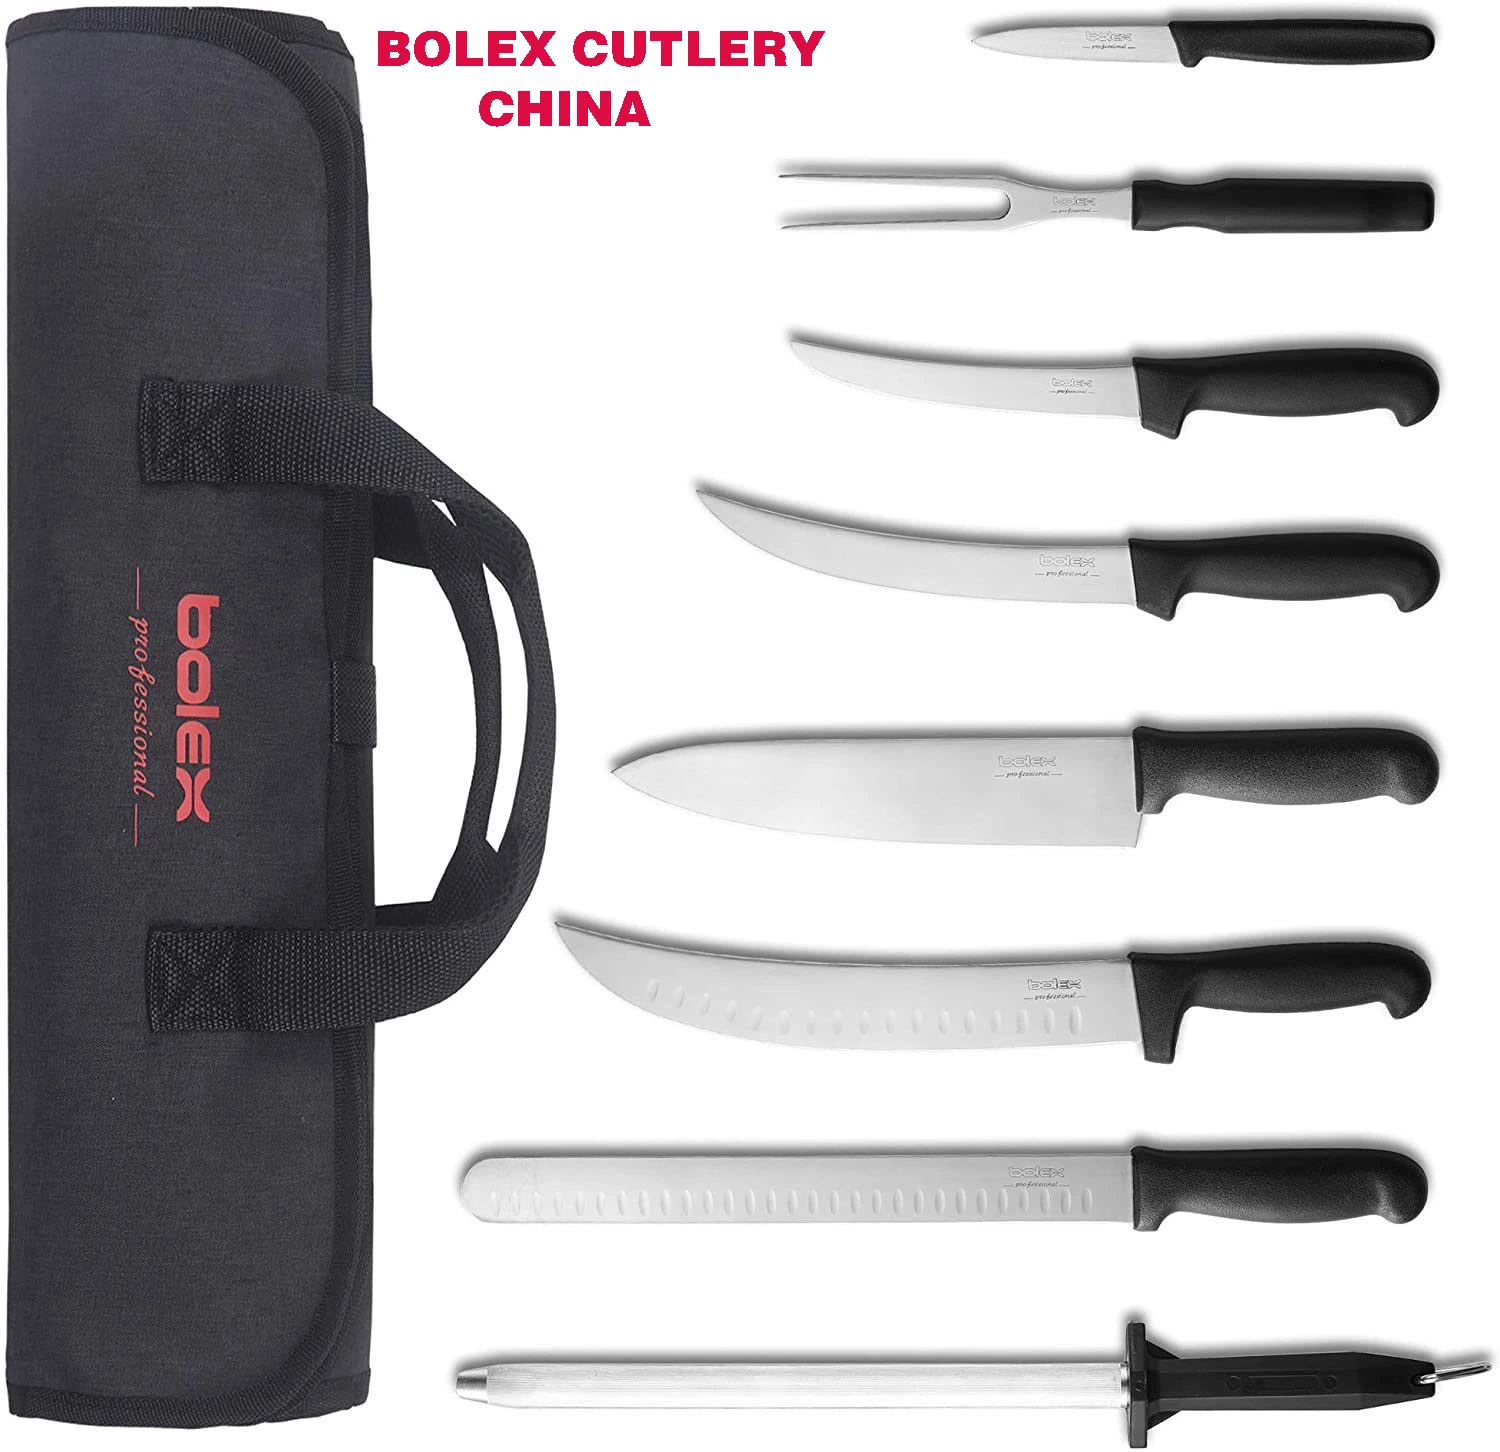 Bolex Cutlery China Kitchen Chef Knives Set